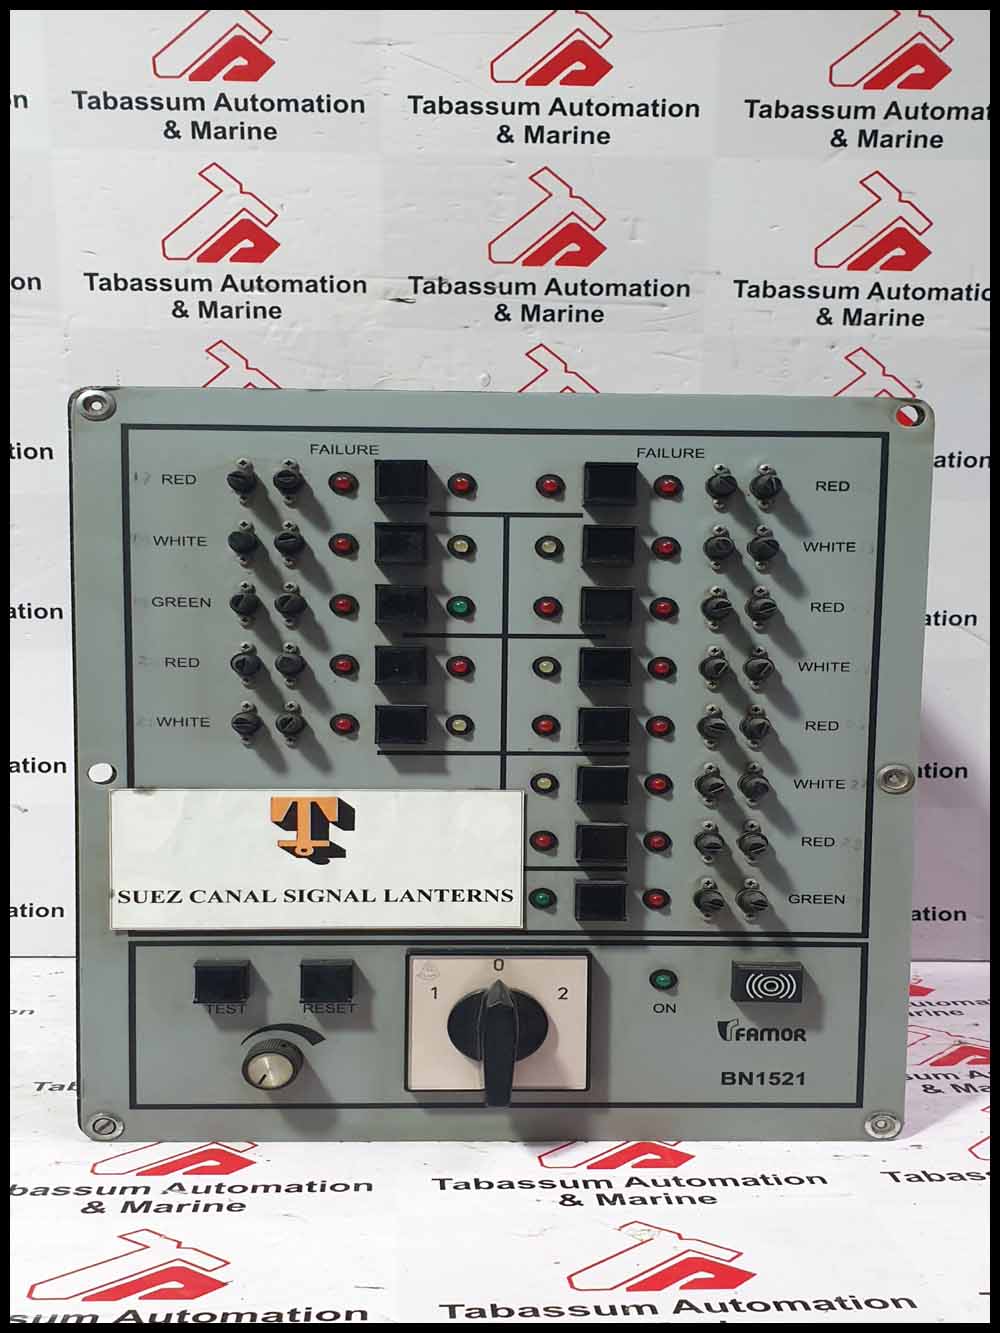 Famor bn1521 control panels